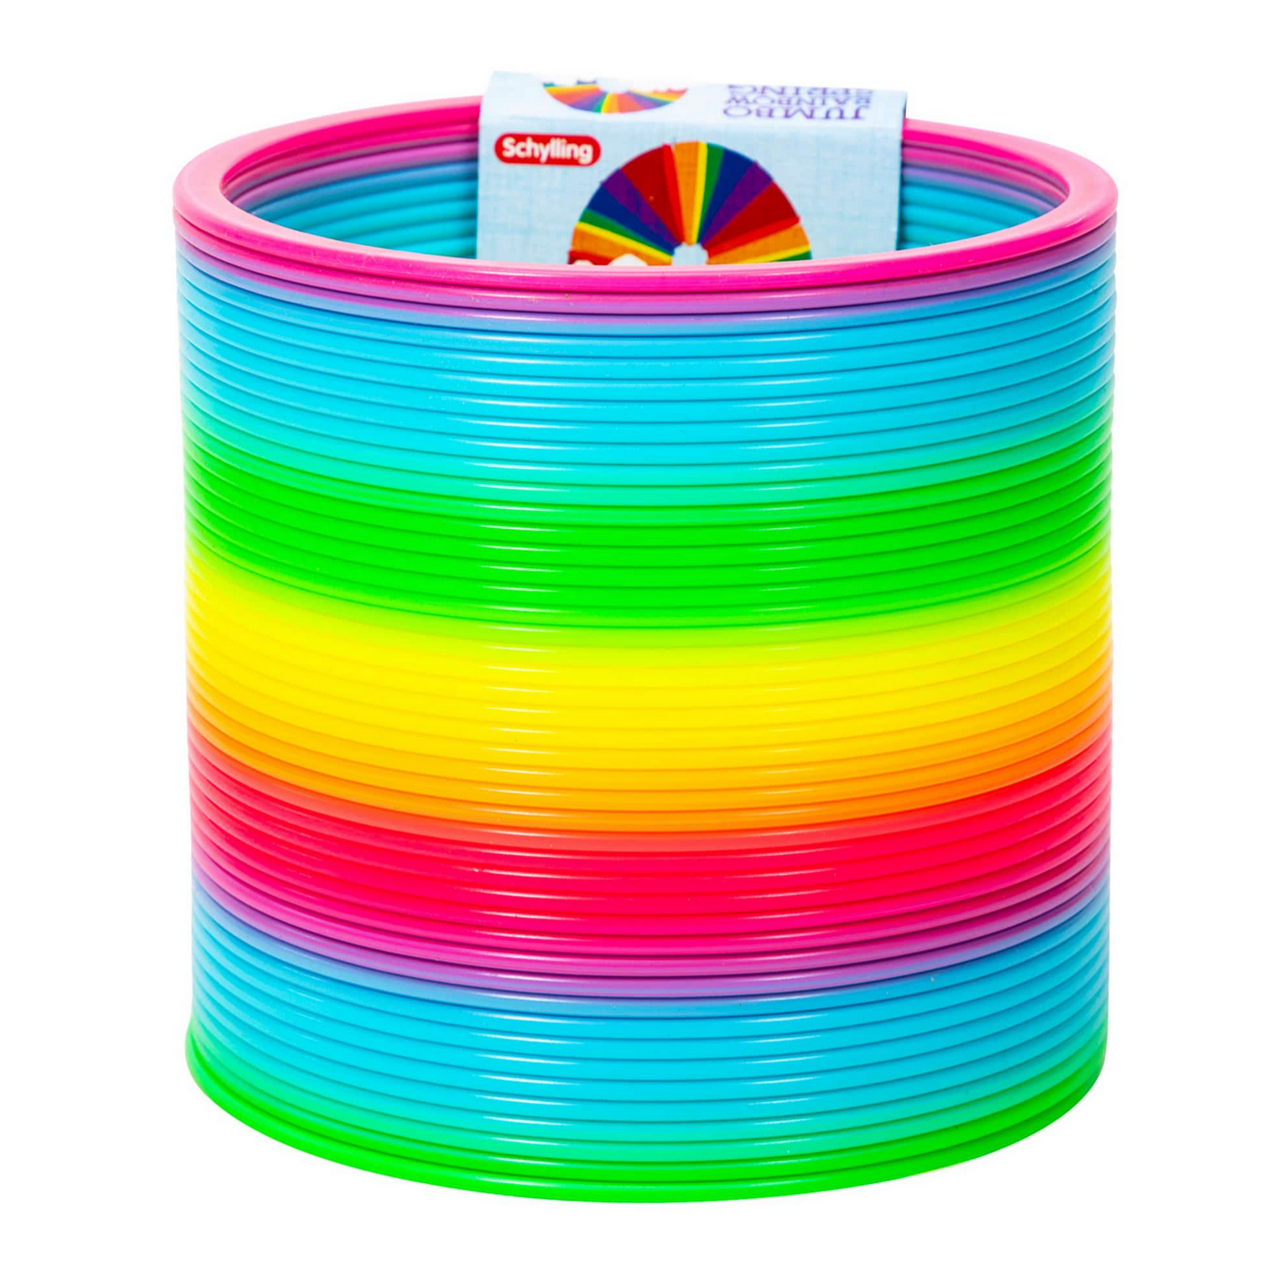 Jumbo Rainbow Spring Toy